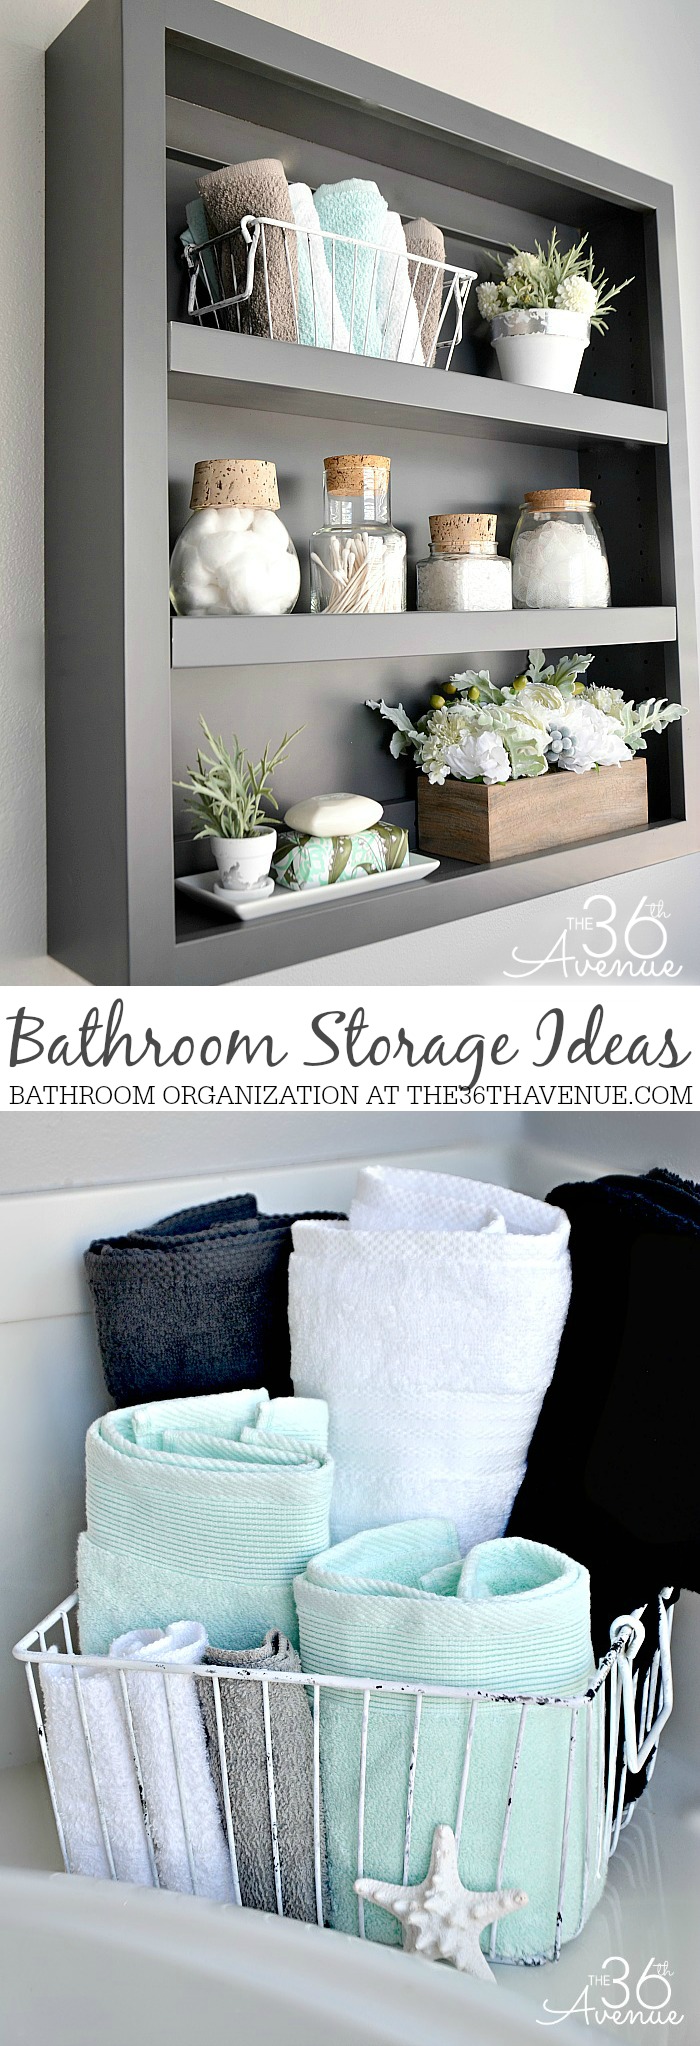 https://www.the36thavenue.com/wp-content/uploads/2015/04/Bathroom-Storage-Ideas-at-the36thavenue.com-.jpg